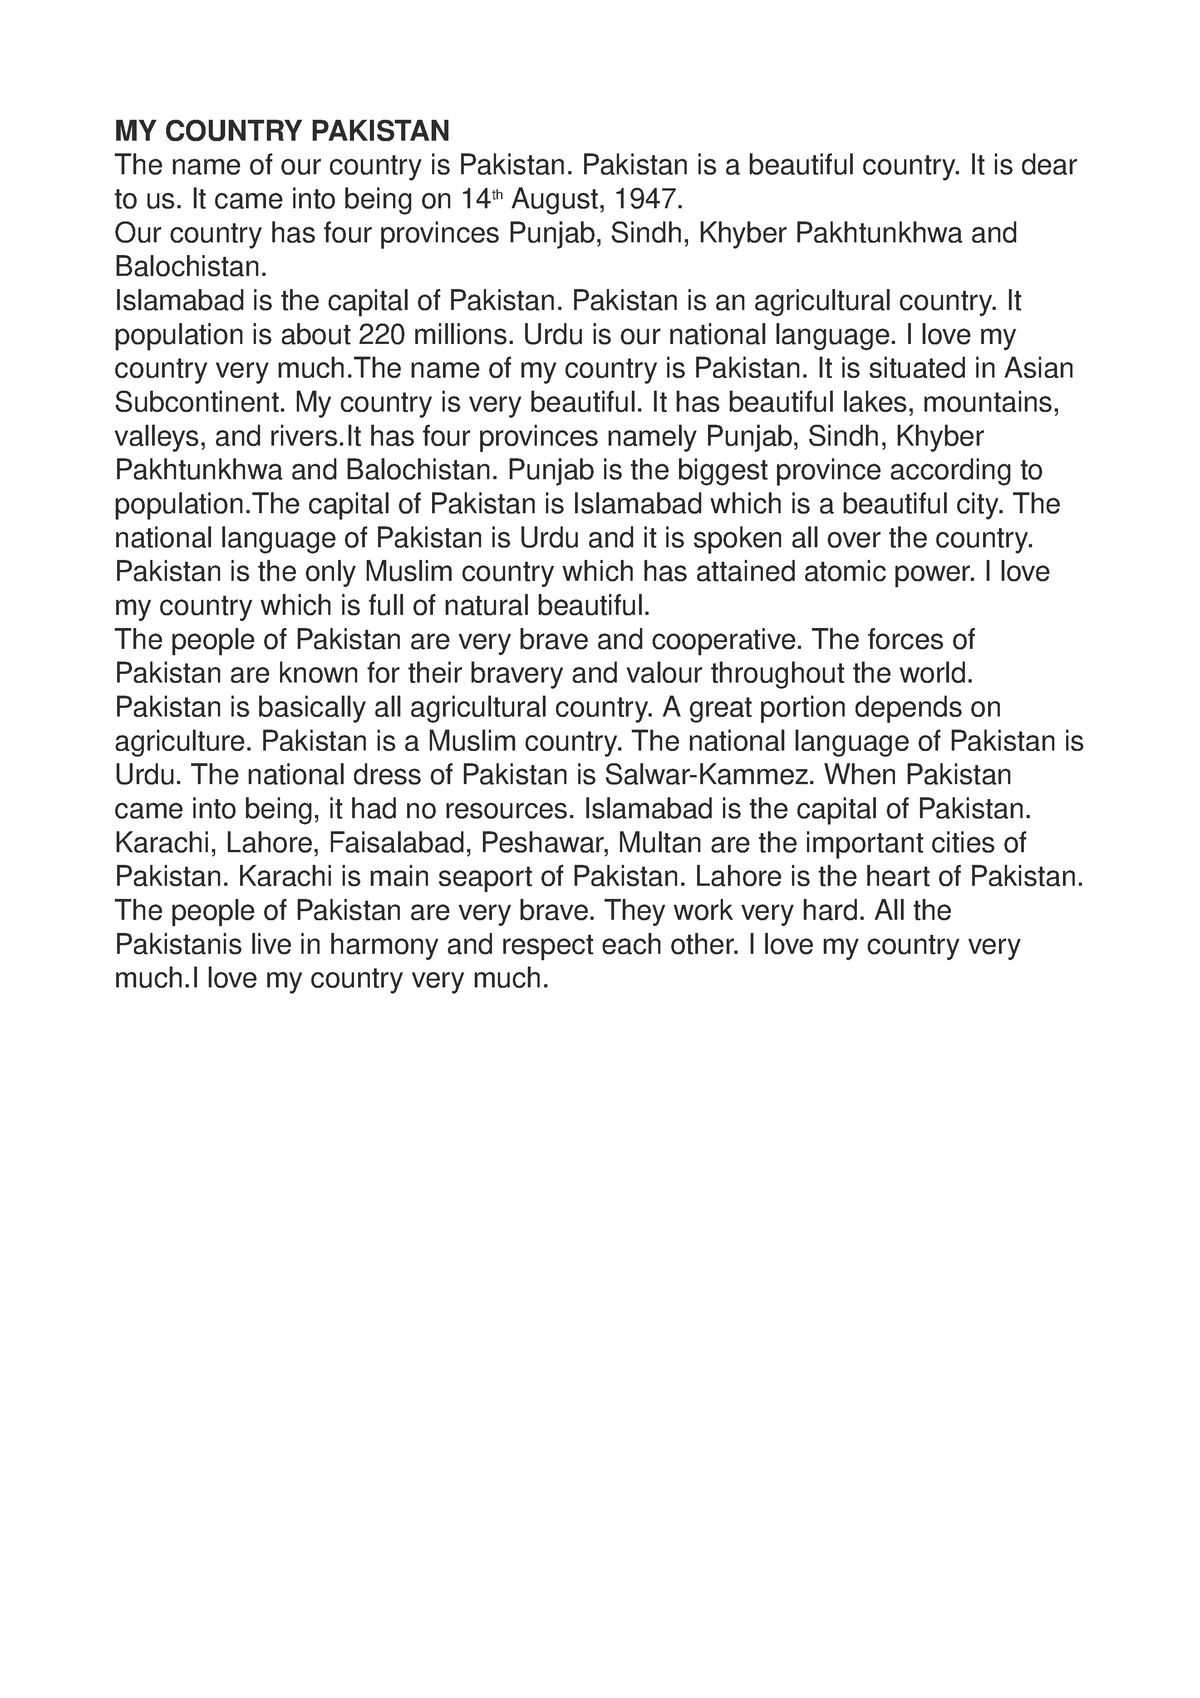 essay on my country pakistan pdf